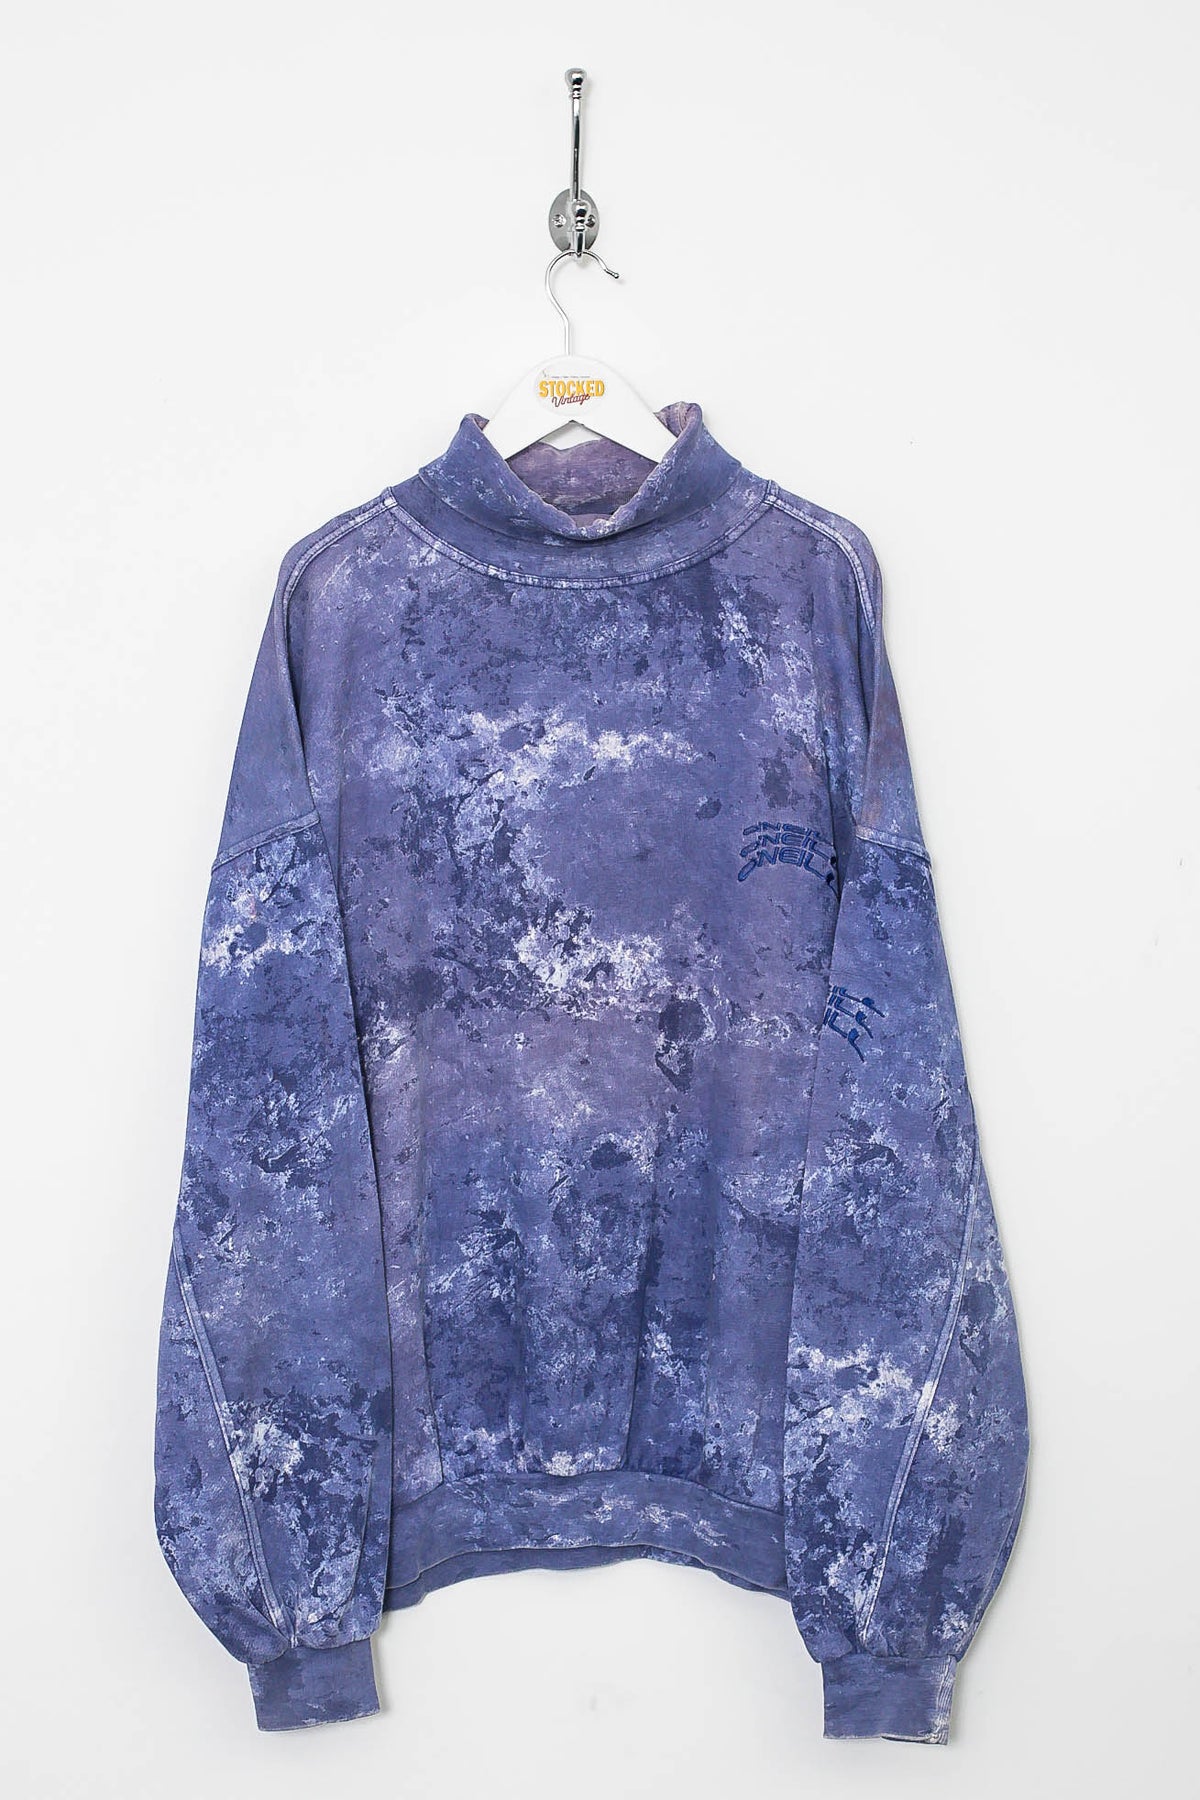 90s O'Neill Sweatshirt (L)